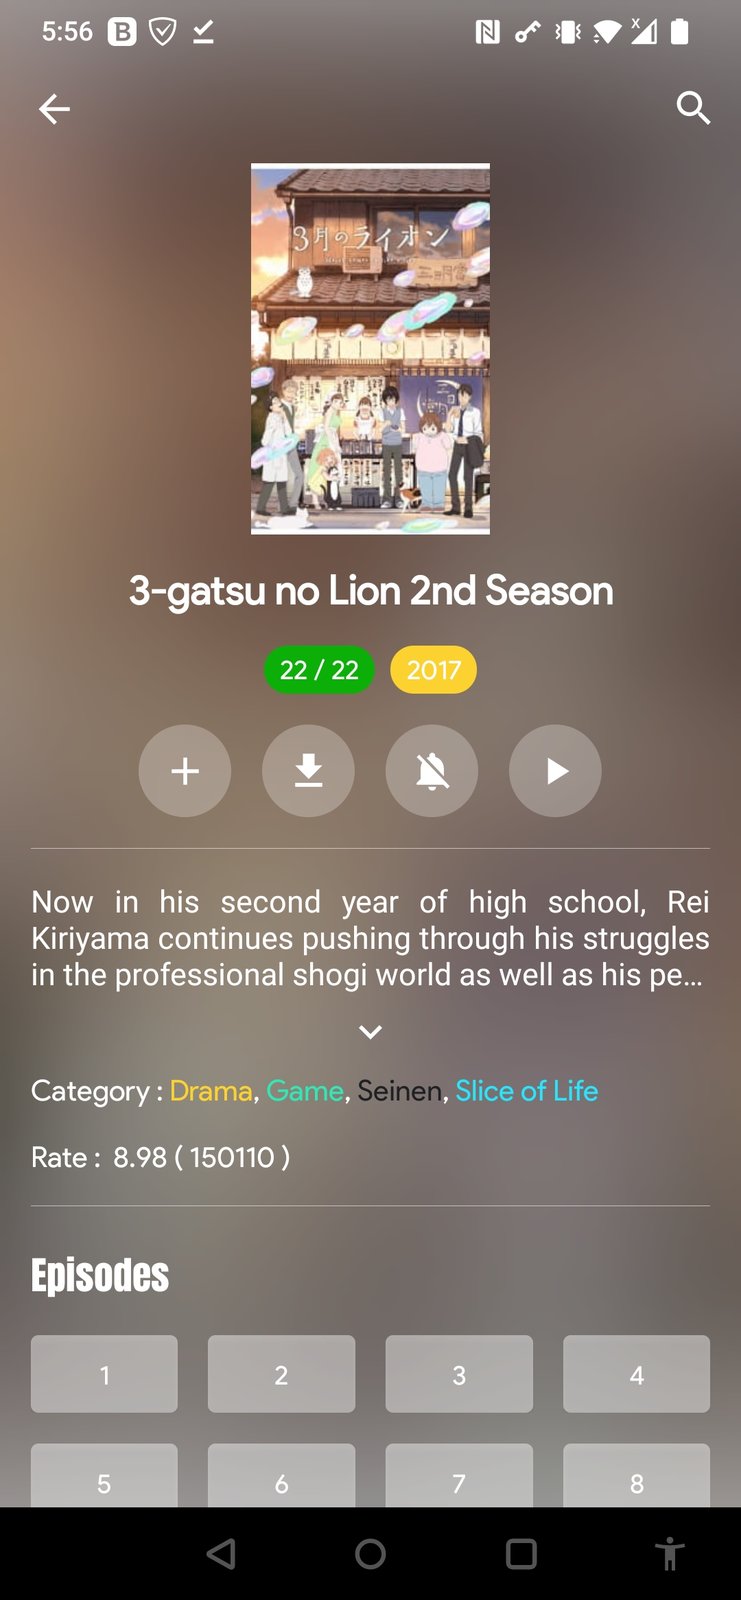 Animofy - Watch Anime Online App - UpLabs